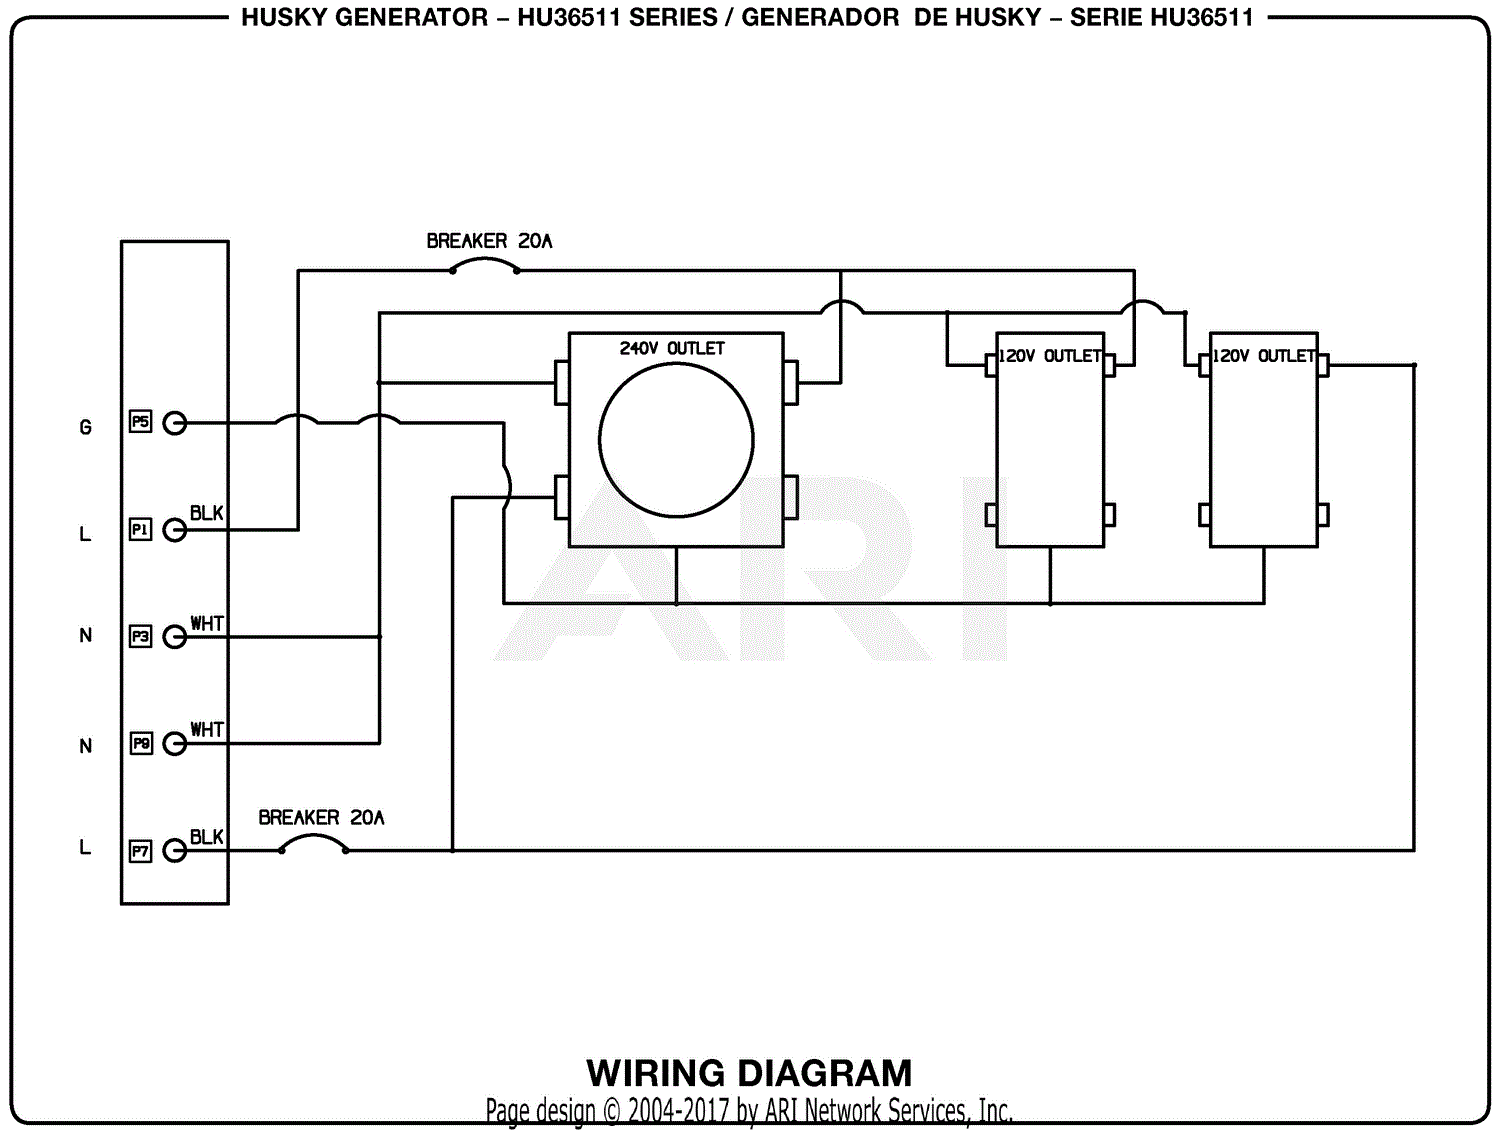 nema 14-30 wiring diagram